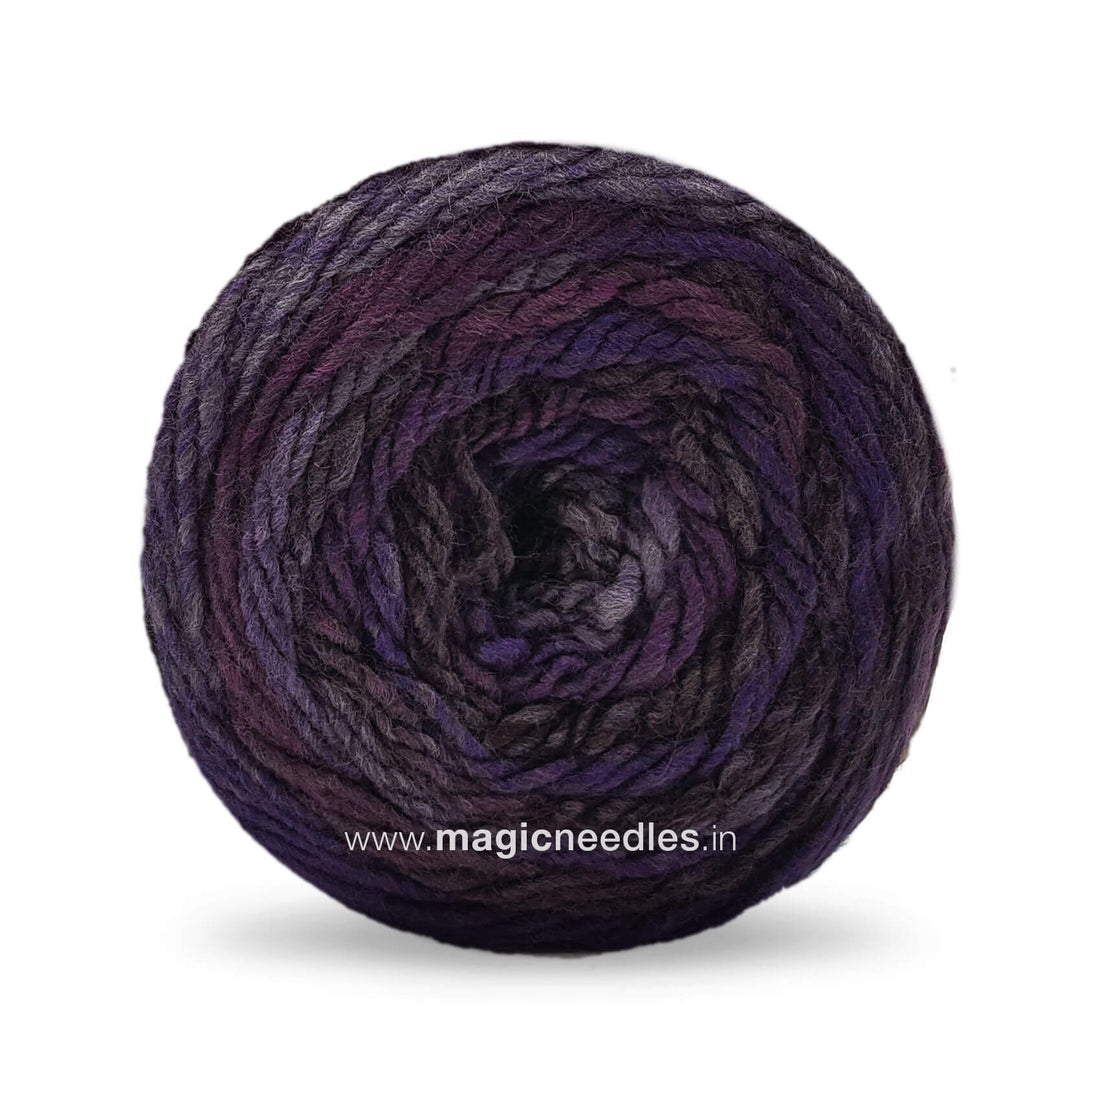 Ganga Desire Hand Knitting and Crochet yarn (Lilac) (200gms) - Desire Hand  Knitting and Crochet yarn (Lilac) (200gms) . shop for Ganga products in  India.